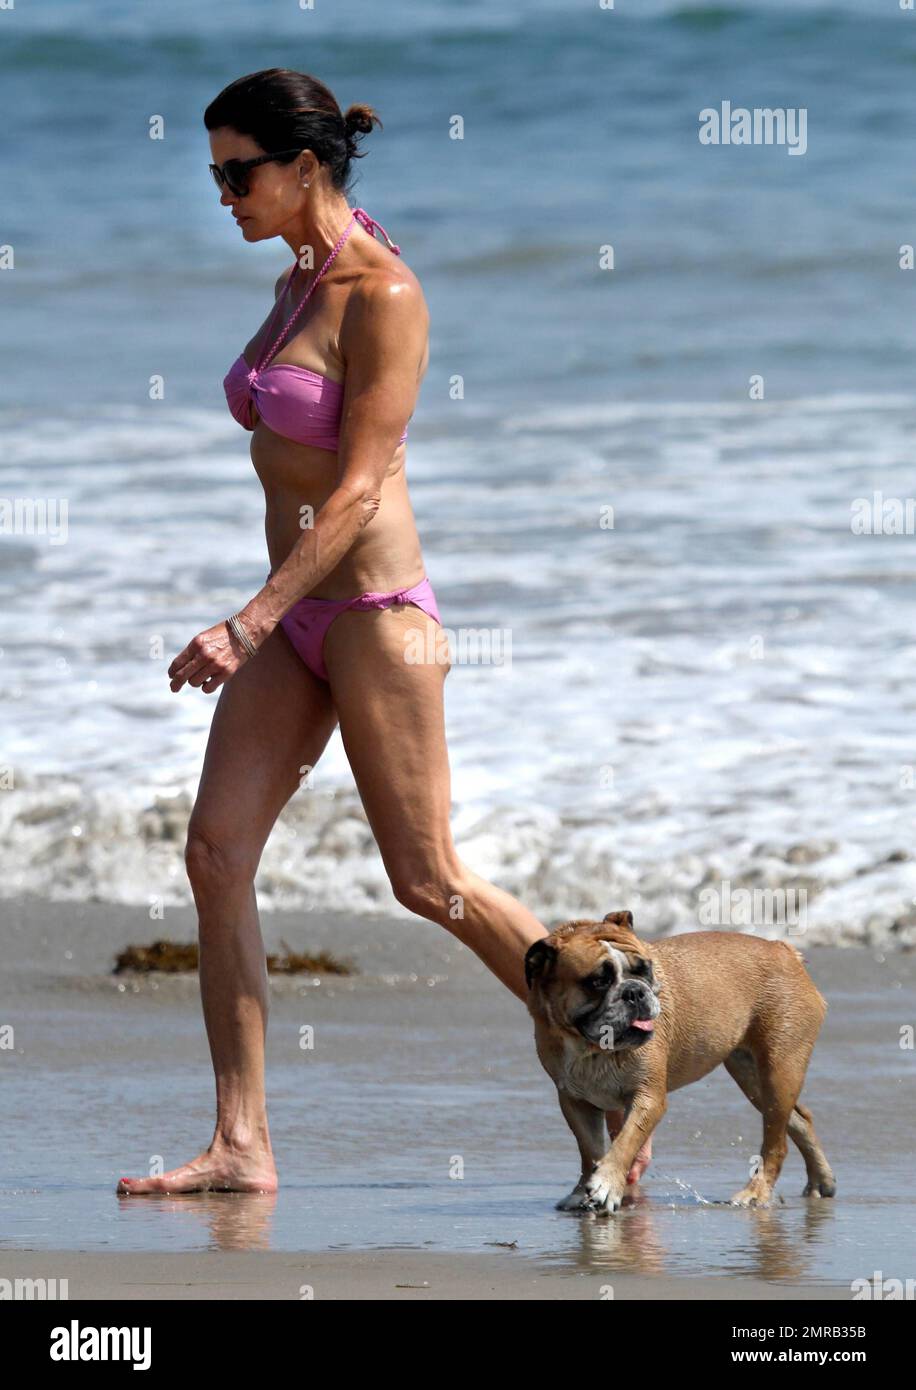 Janice Dickinson enjoys Bond Girl moment as she flashes nipples in bikini, Celebrity News, Showbiz & TV